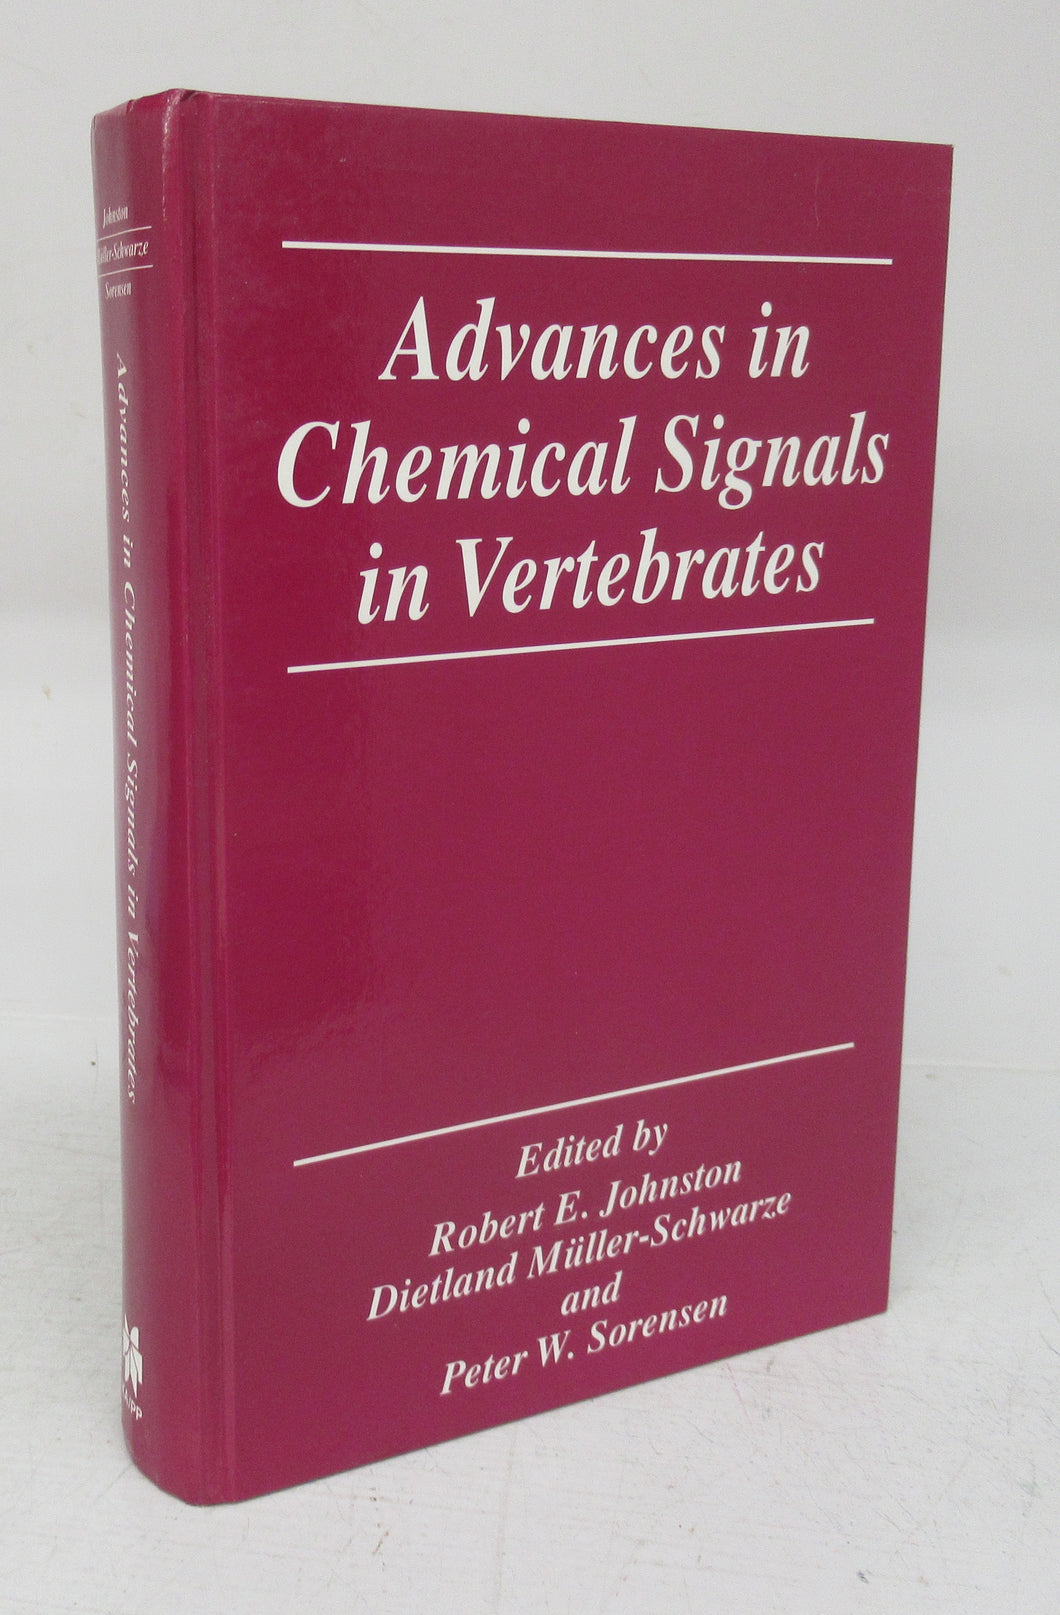 Advances in Chemical Signals in Vertebrates